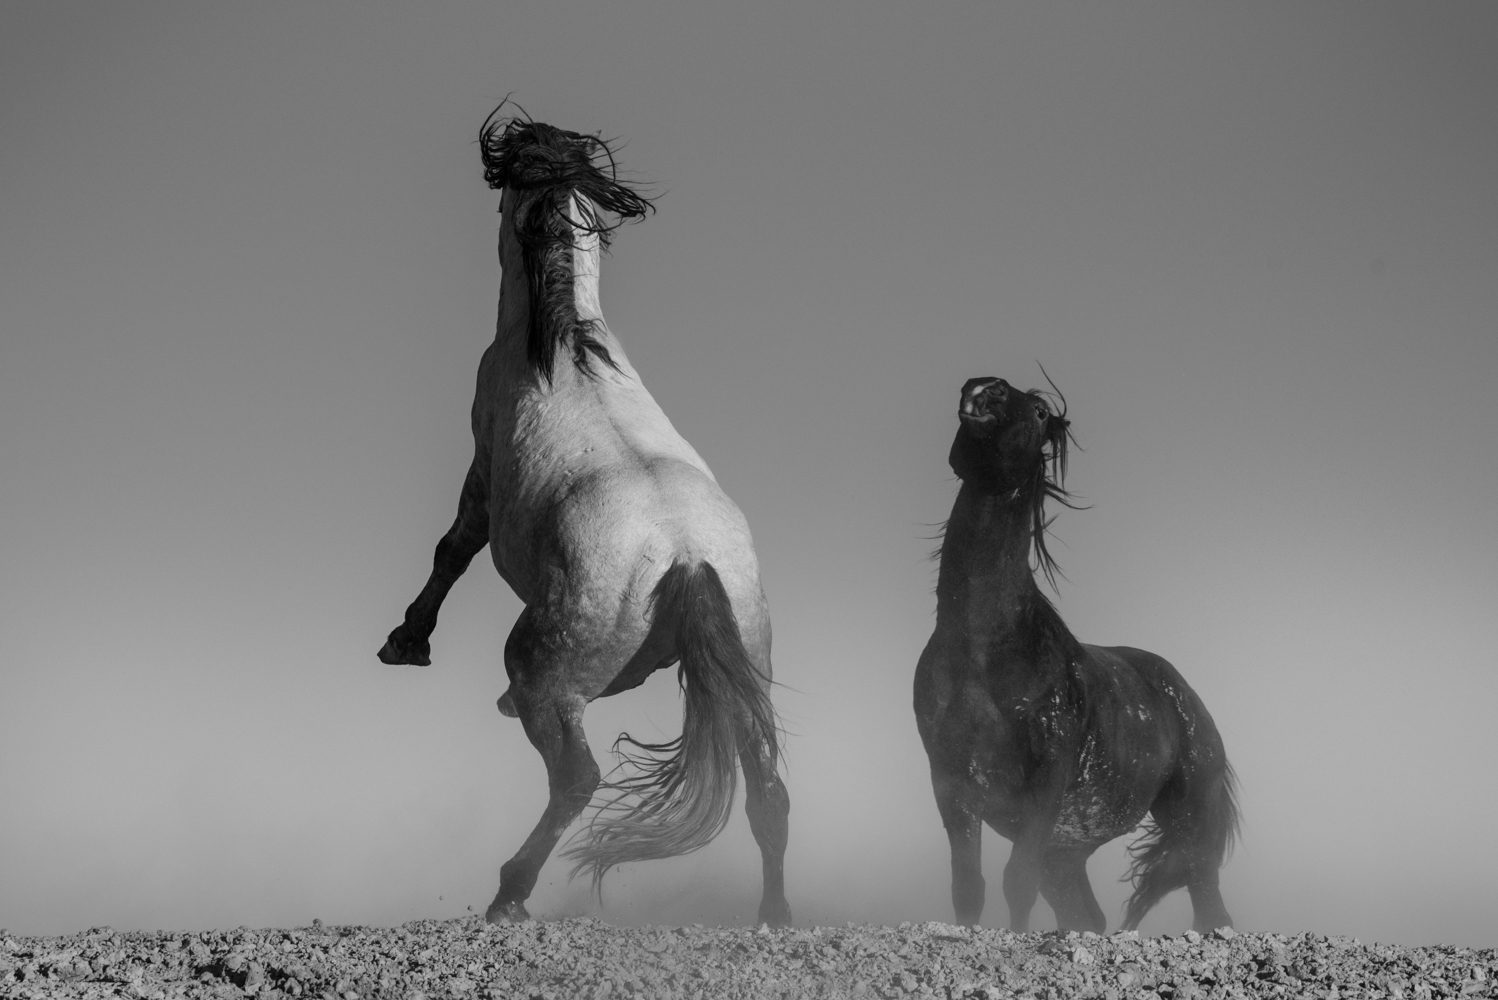 Sandy Sharkey's Photograph of Two Wild Horses Having a Duel